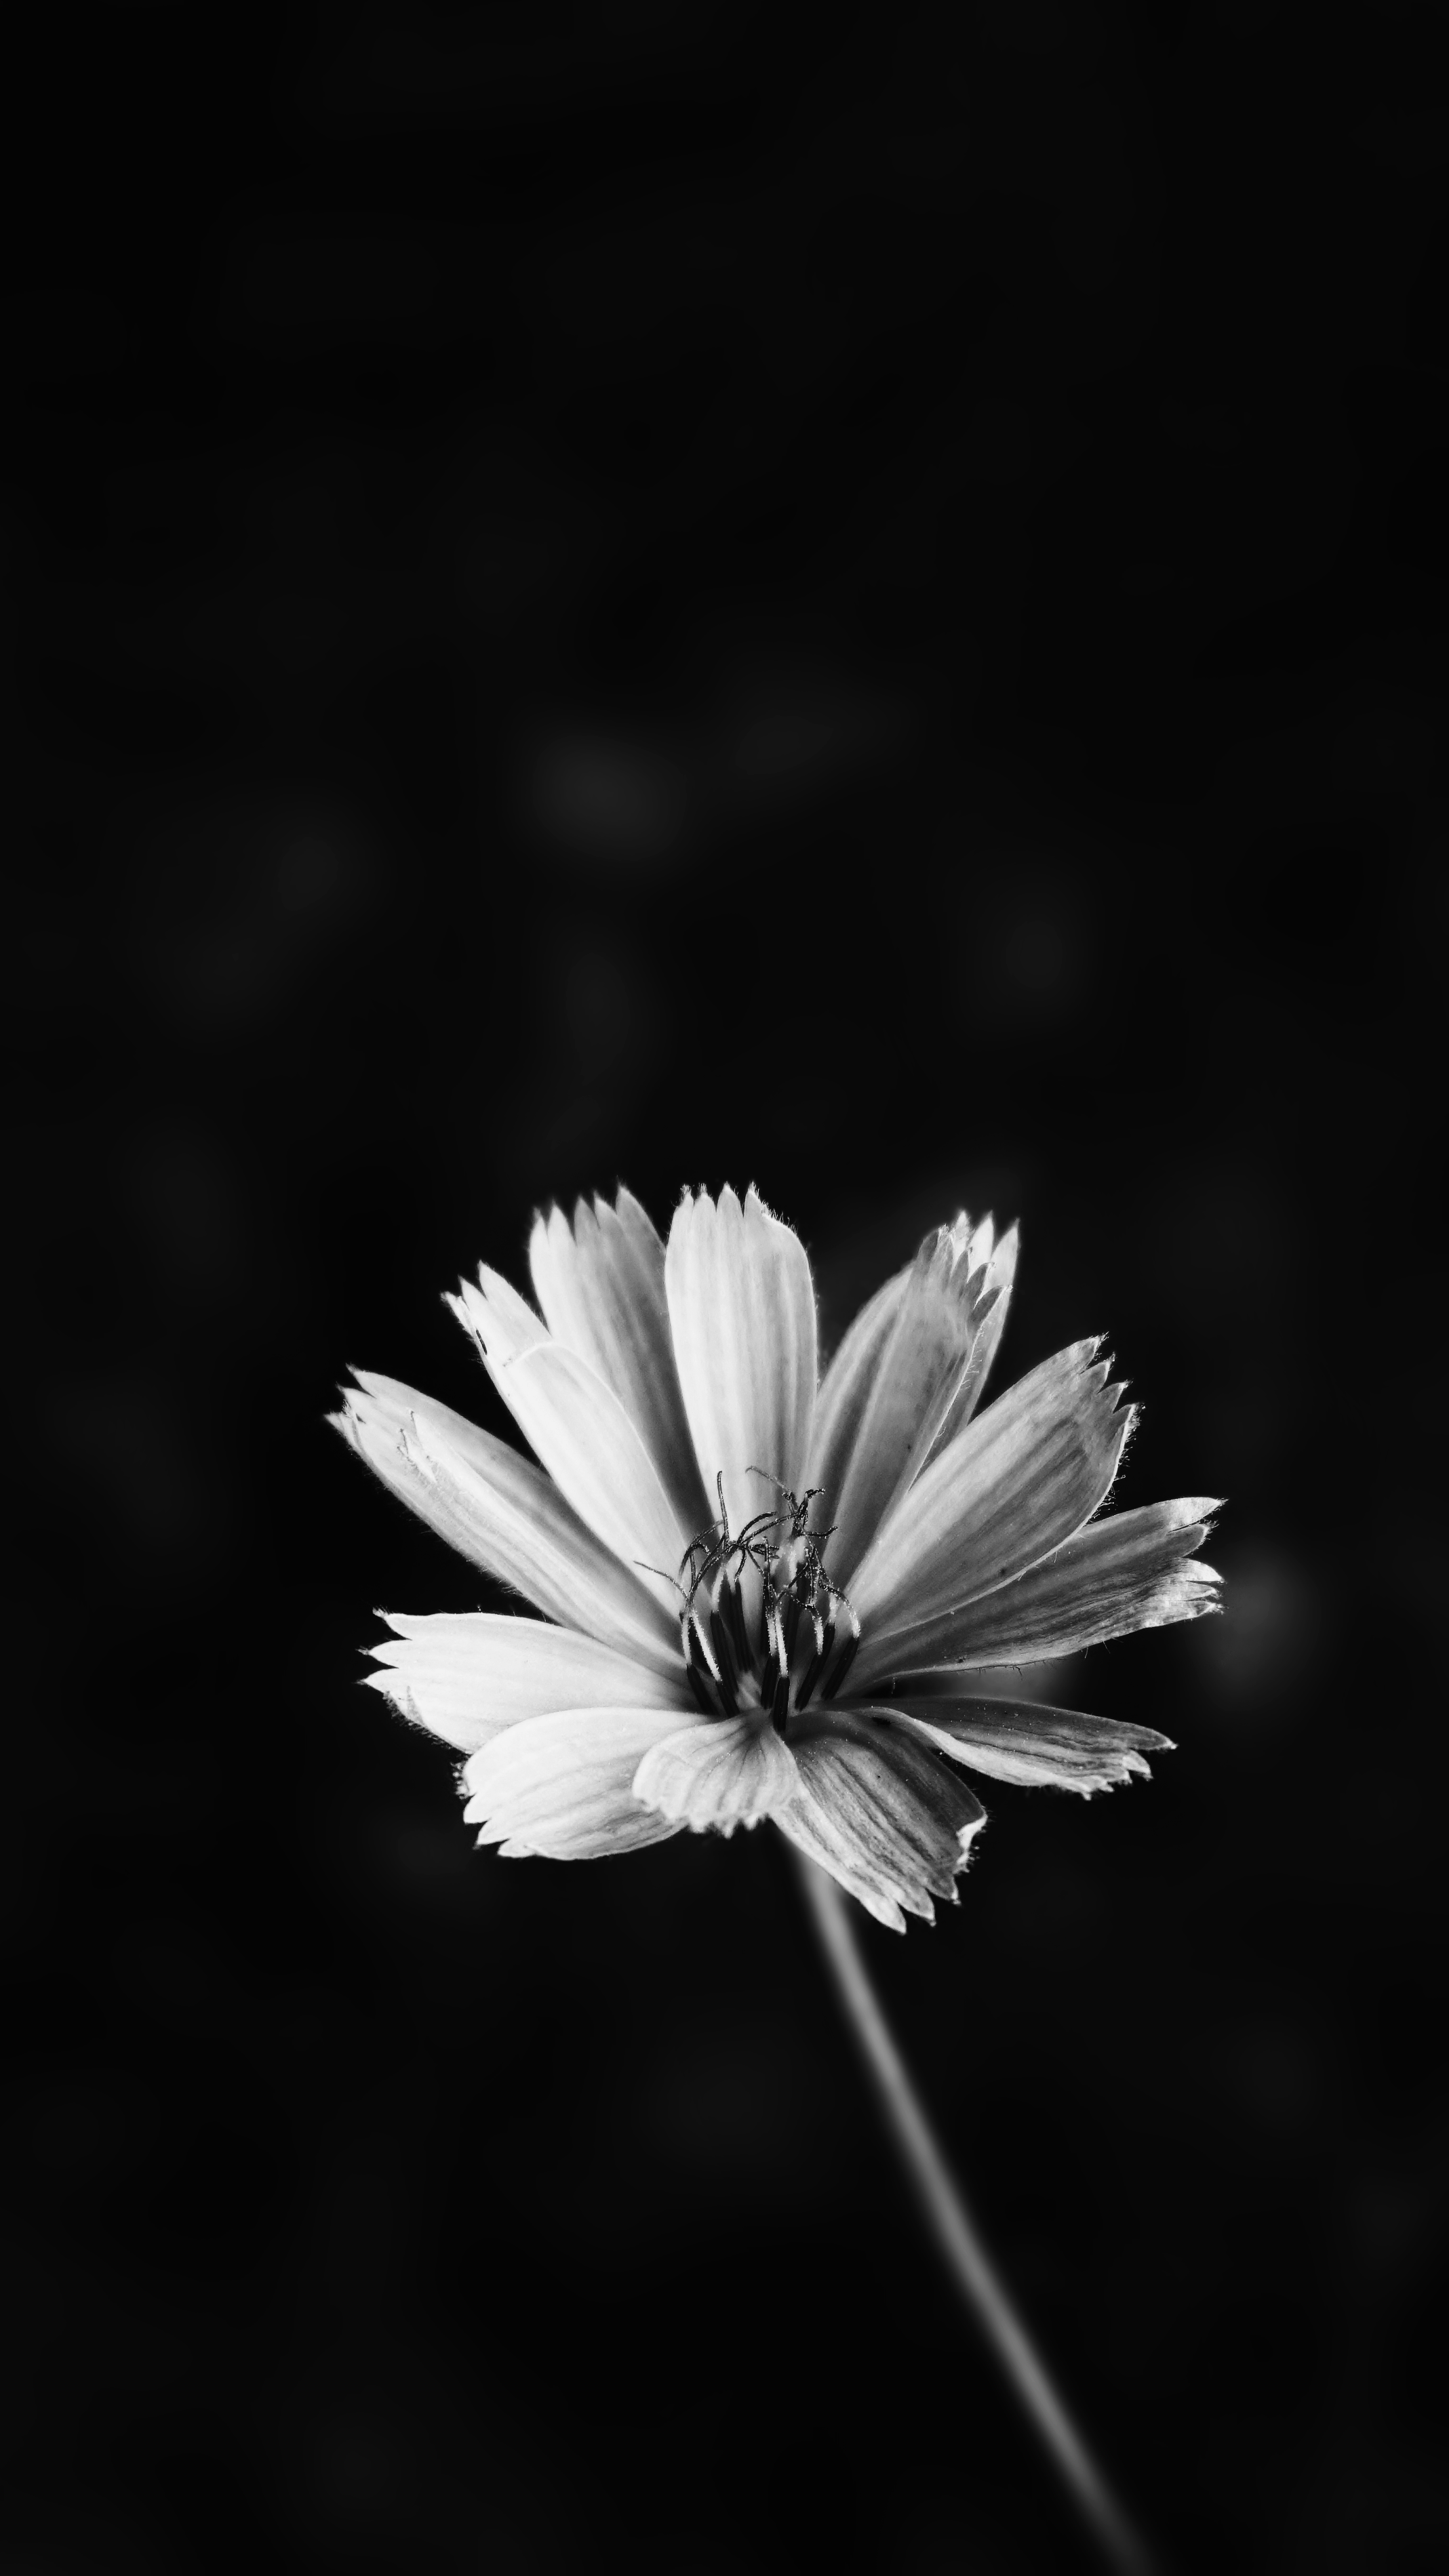 foto wallpaper,petal,monochrome photography,black and white,flower,nature